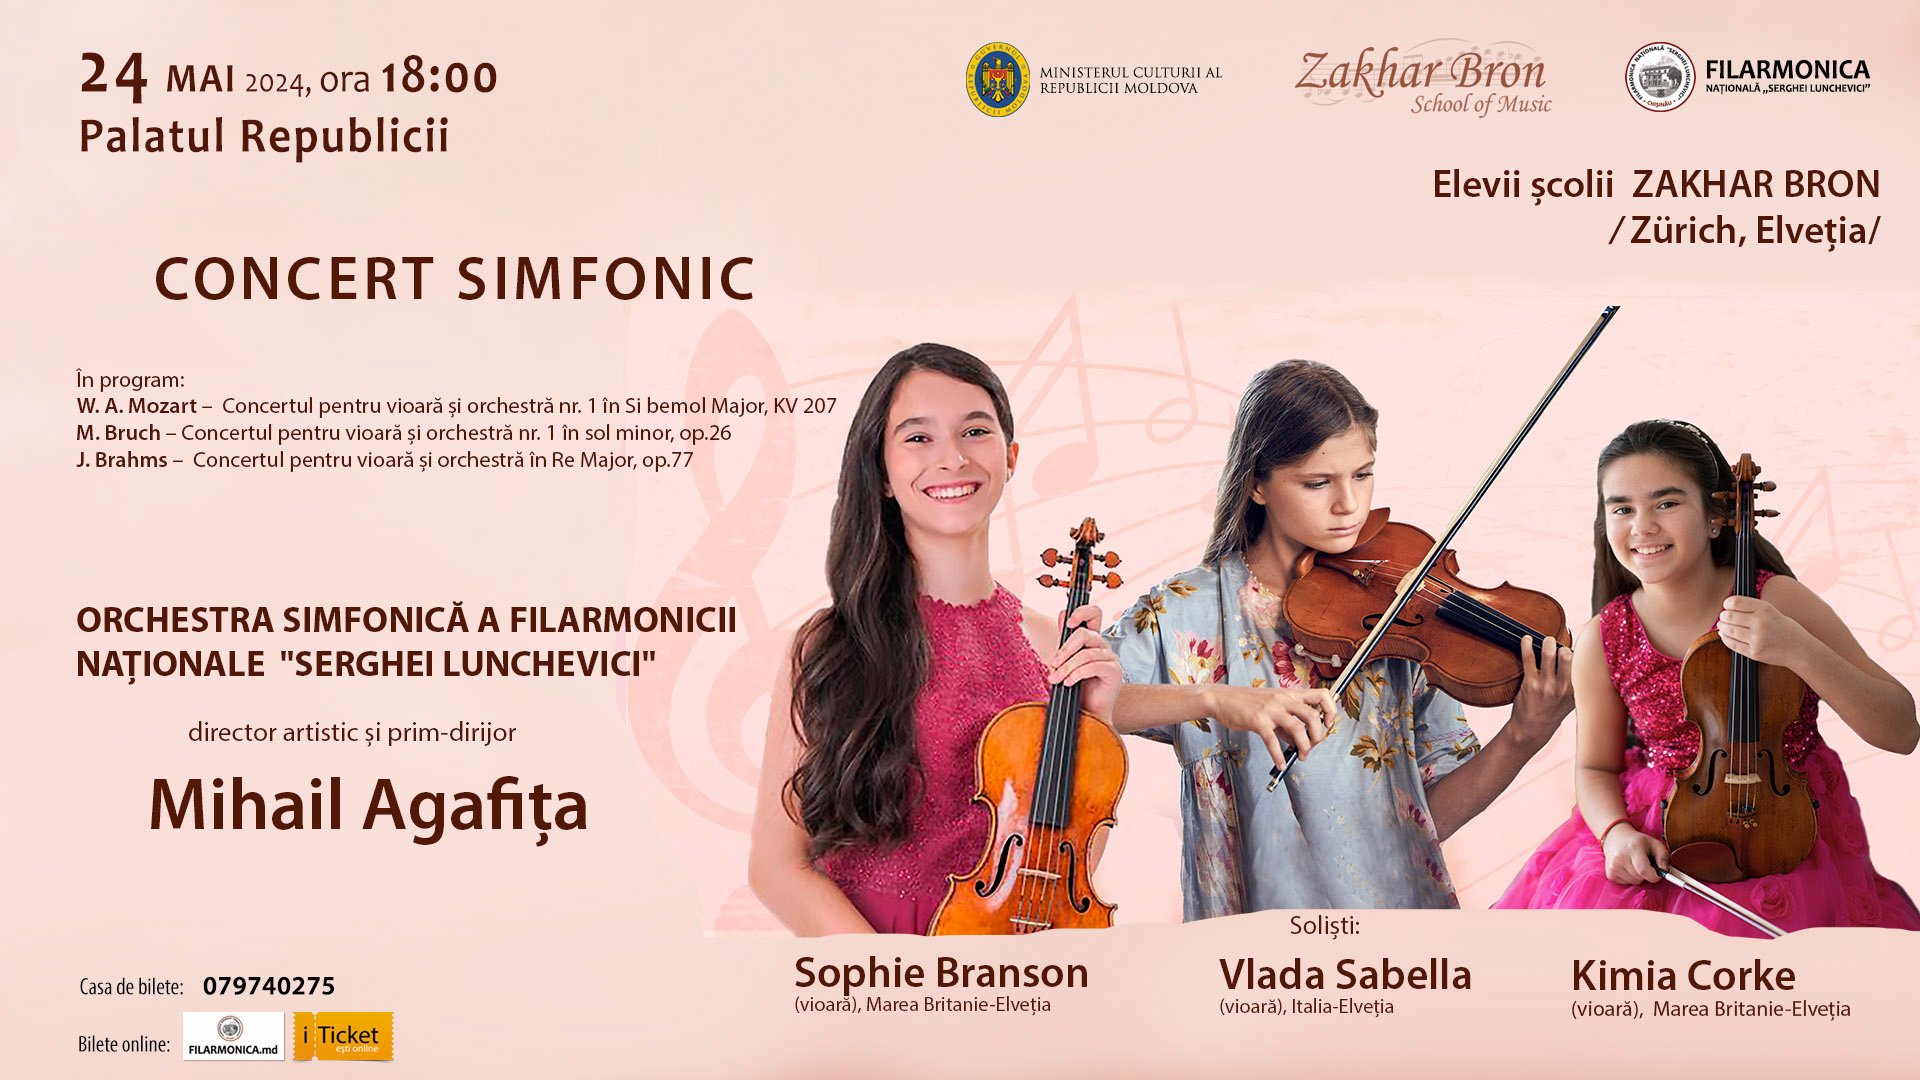 Concert Simfonic elevii școlii ZAKHAR BRON 